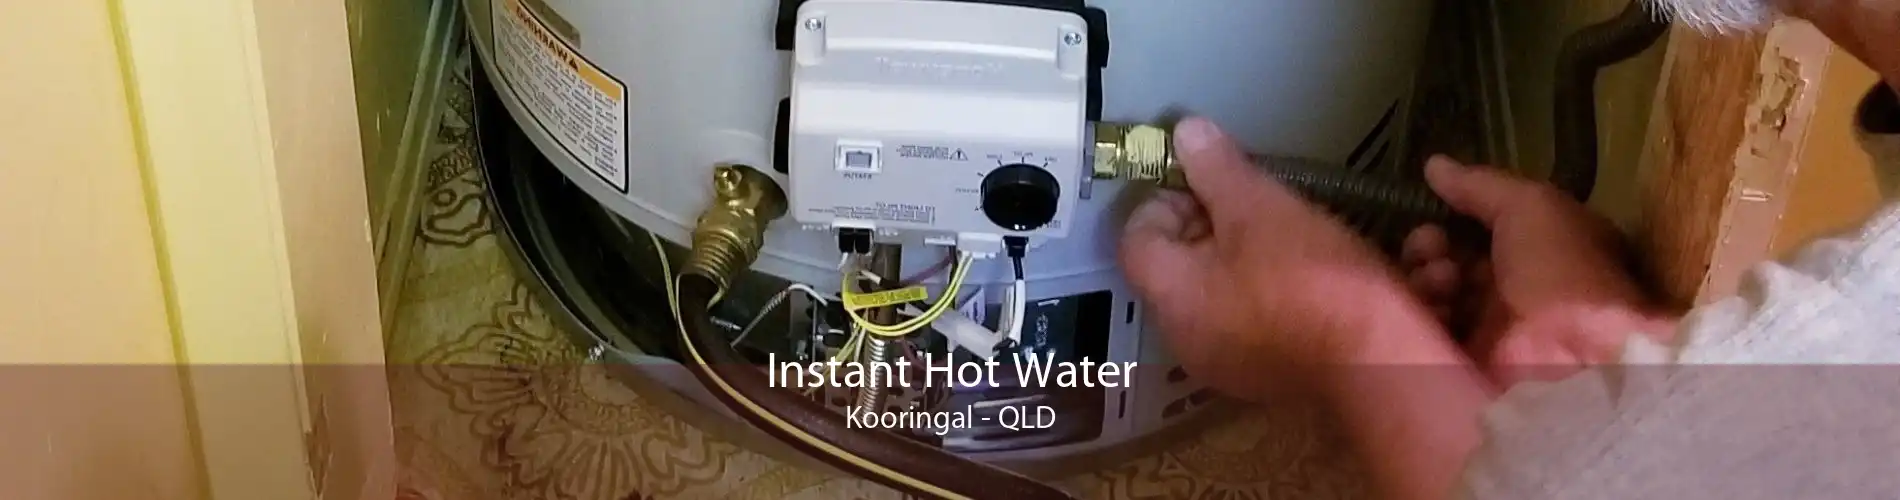 Instant Hot Water Kooringal - QLD